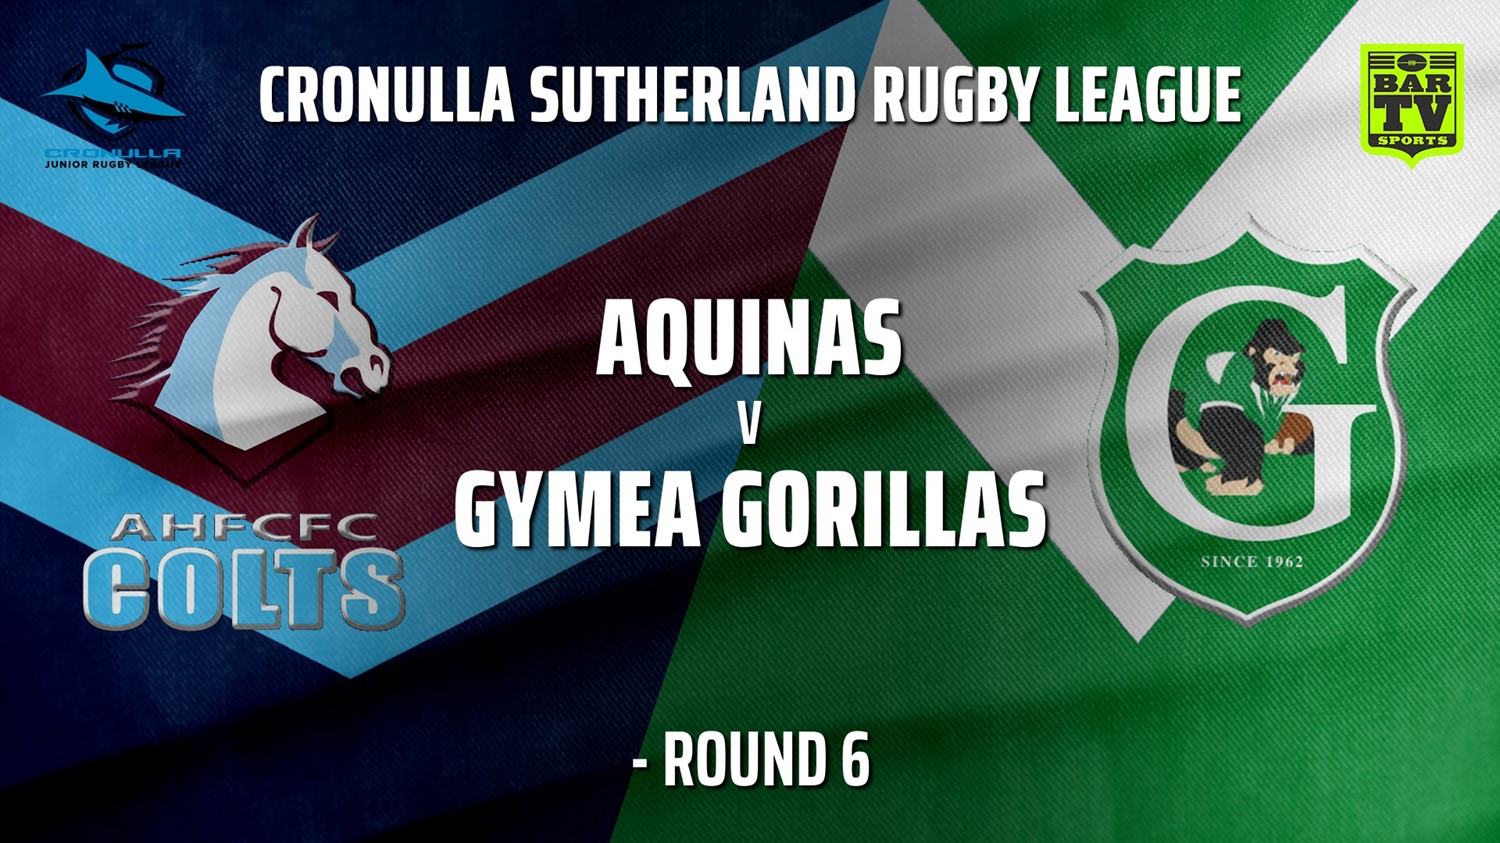 210606-Cronulla JRL - Under 20s Round 6 - Aquinas Colts v Gymea Gorillas Minigame Slate Image